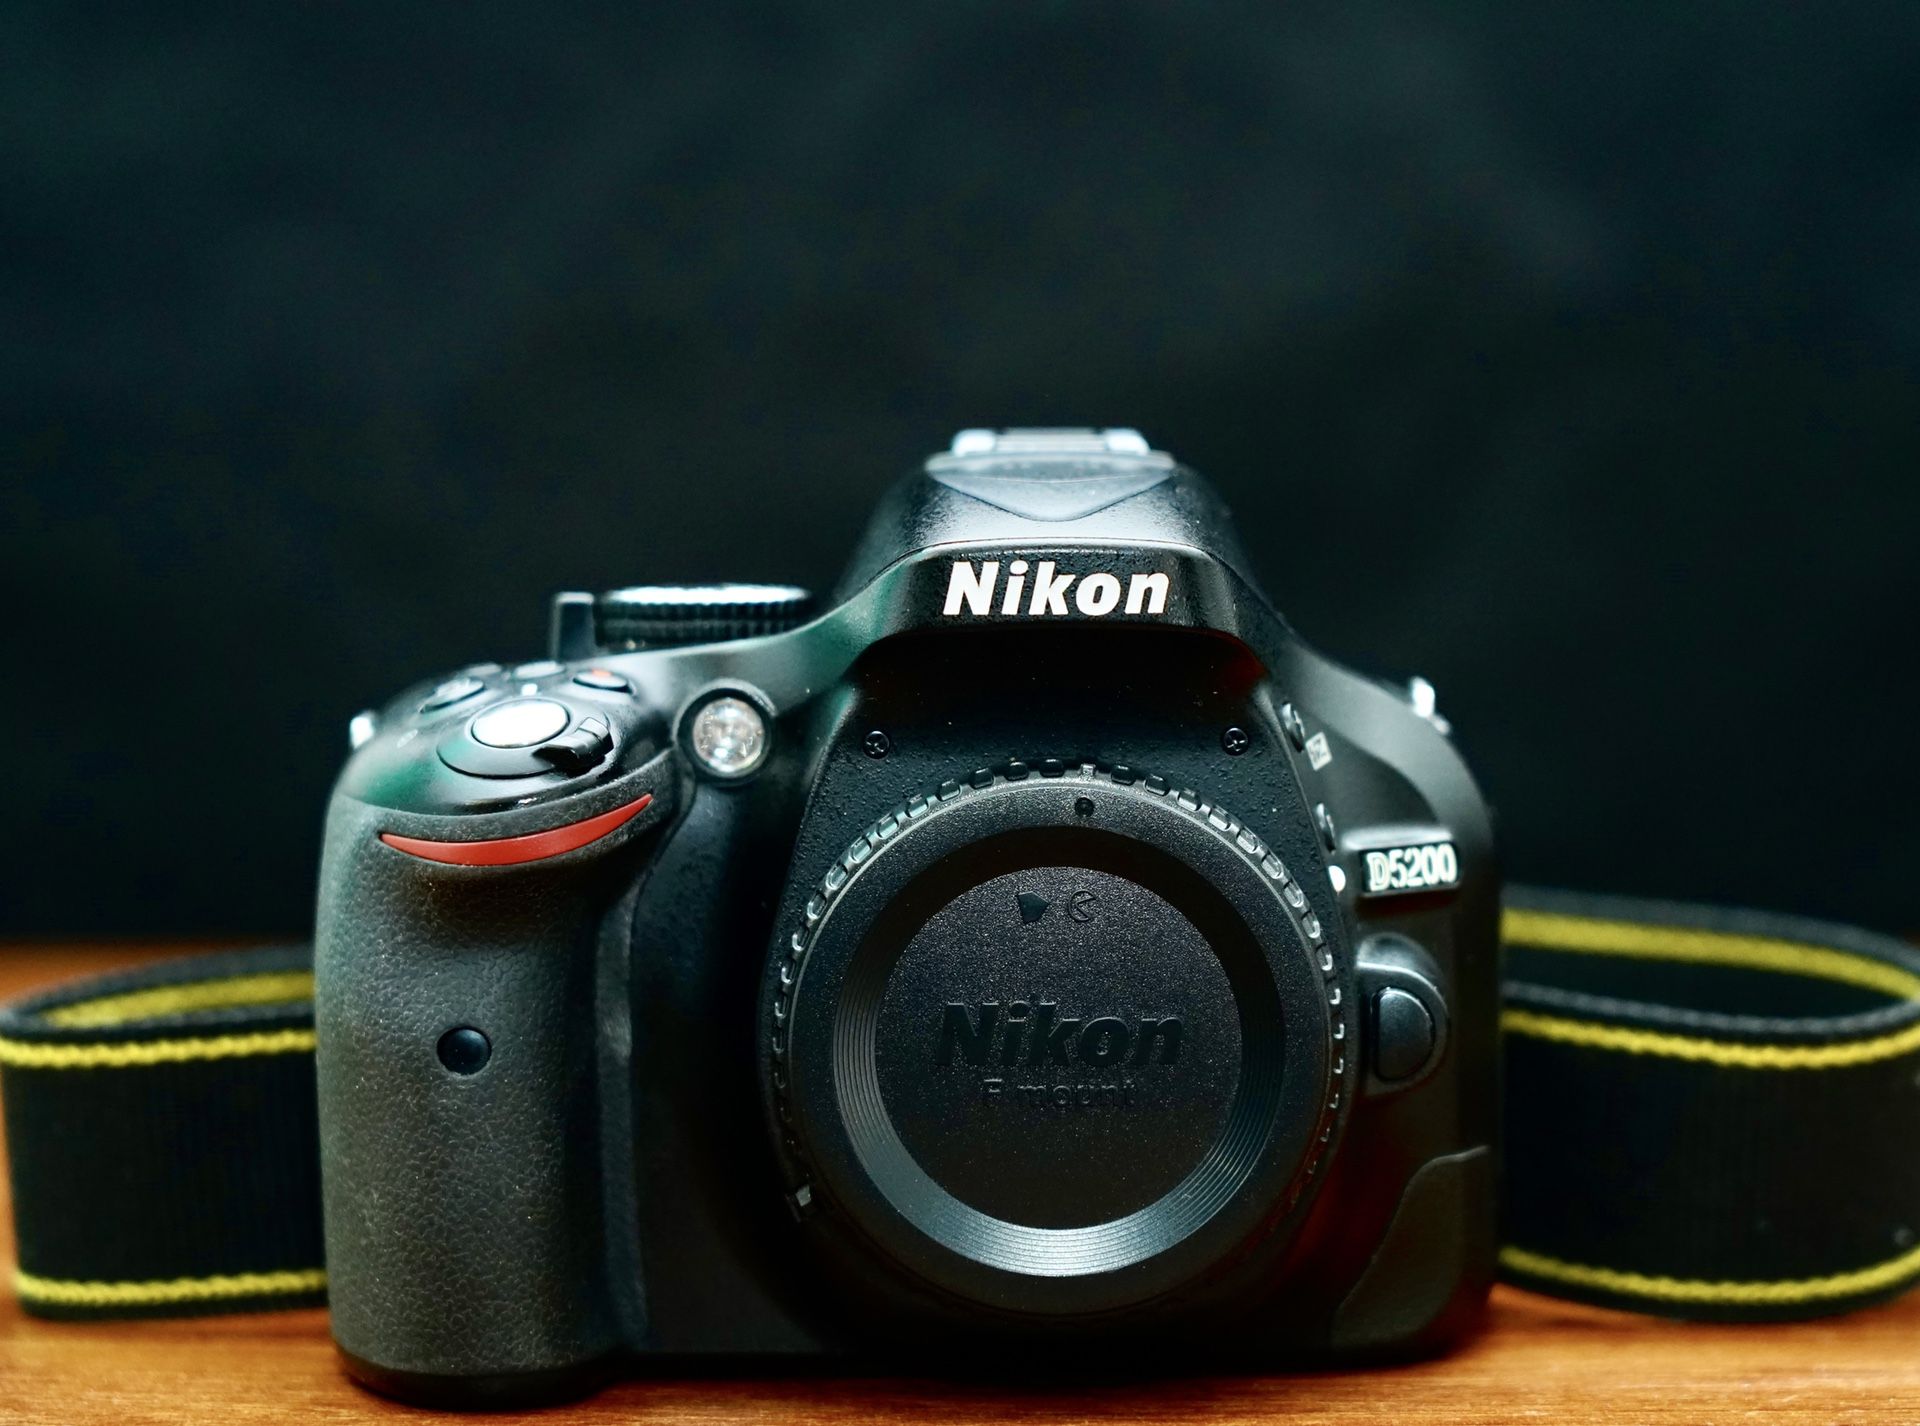 Nikon D5200 with Sigma 18-300mm Lens